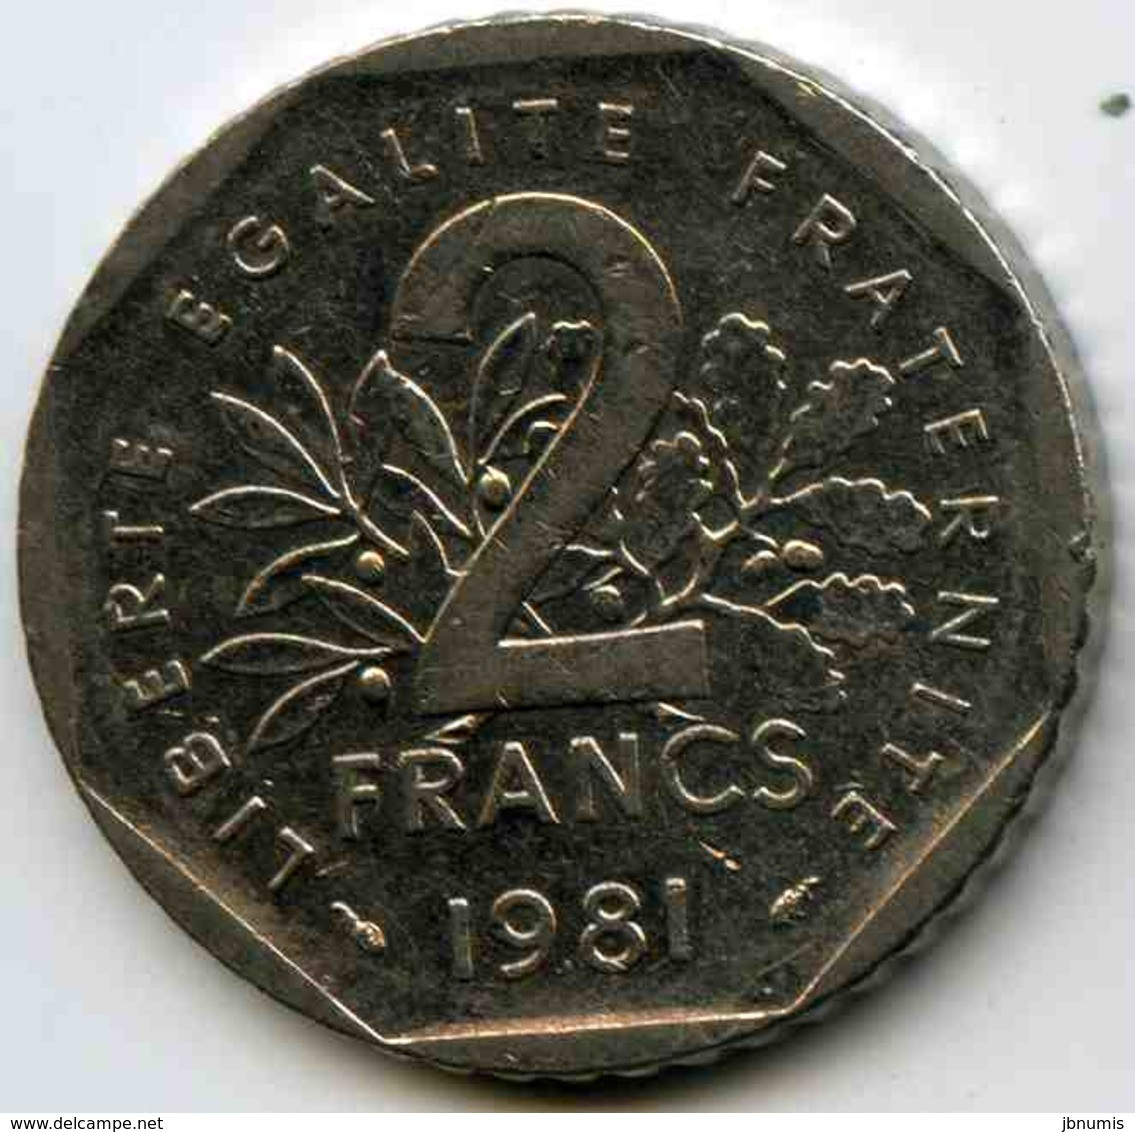 France 2 Francs 1981 GAD 547 KM 942.1 - 2 Francs